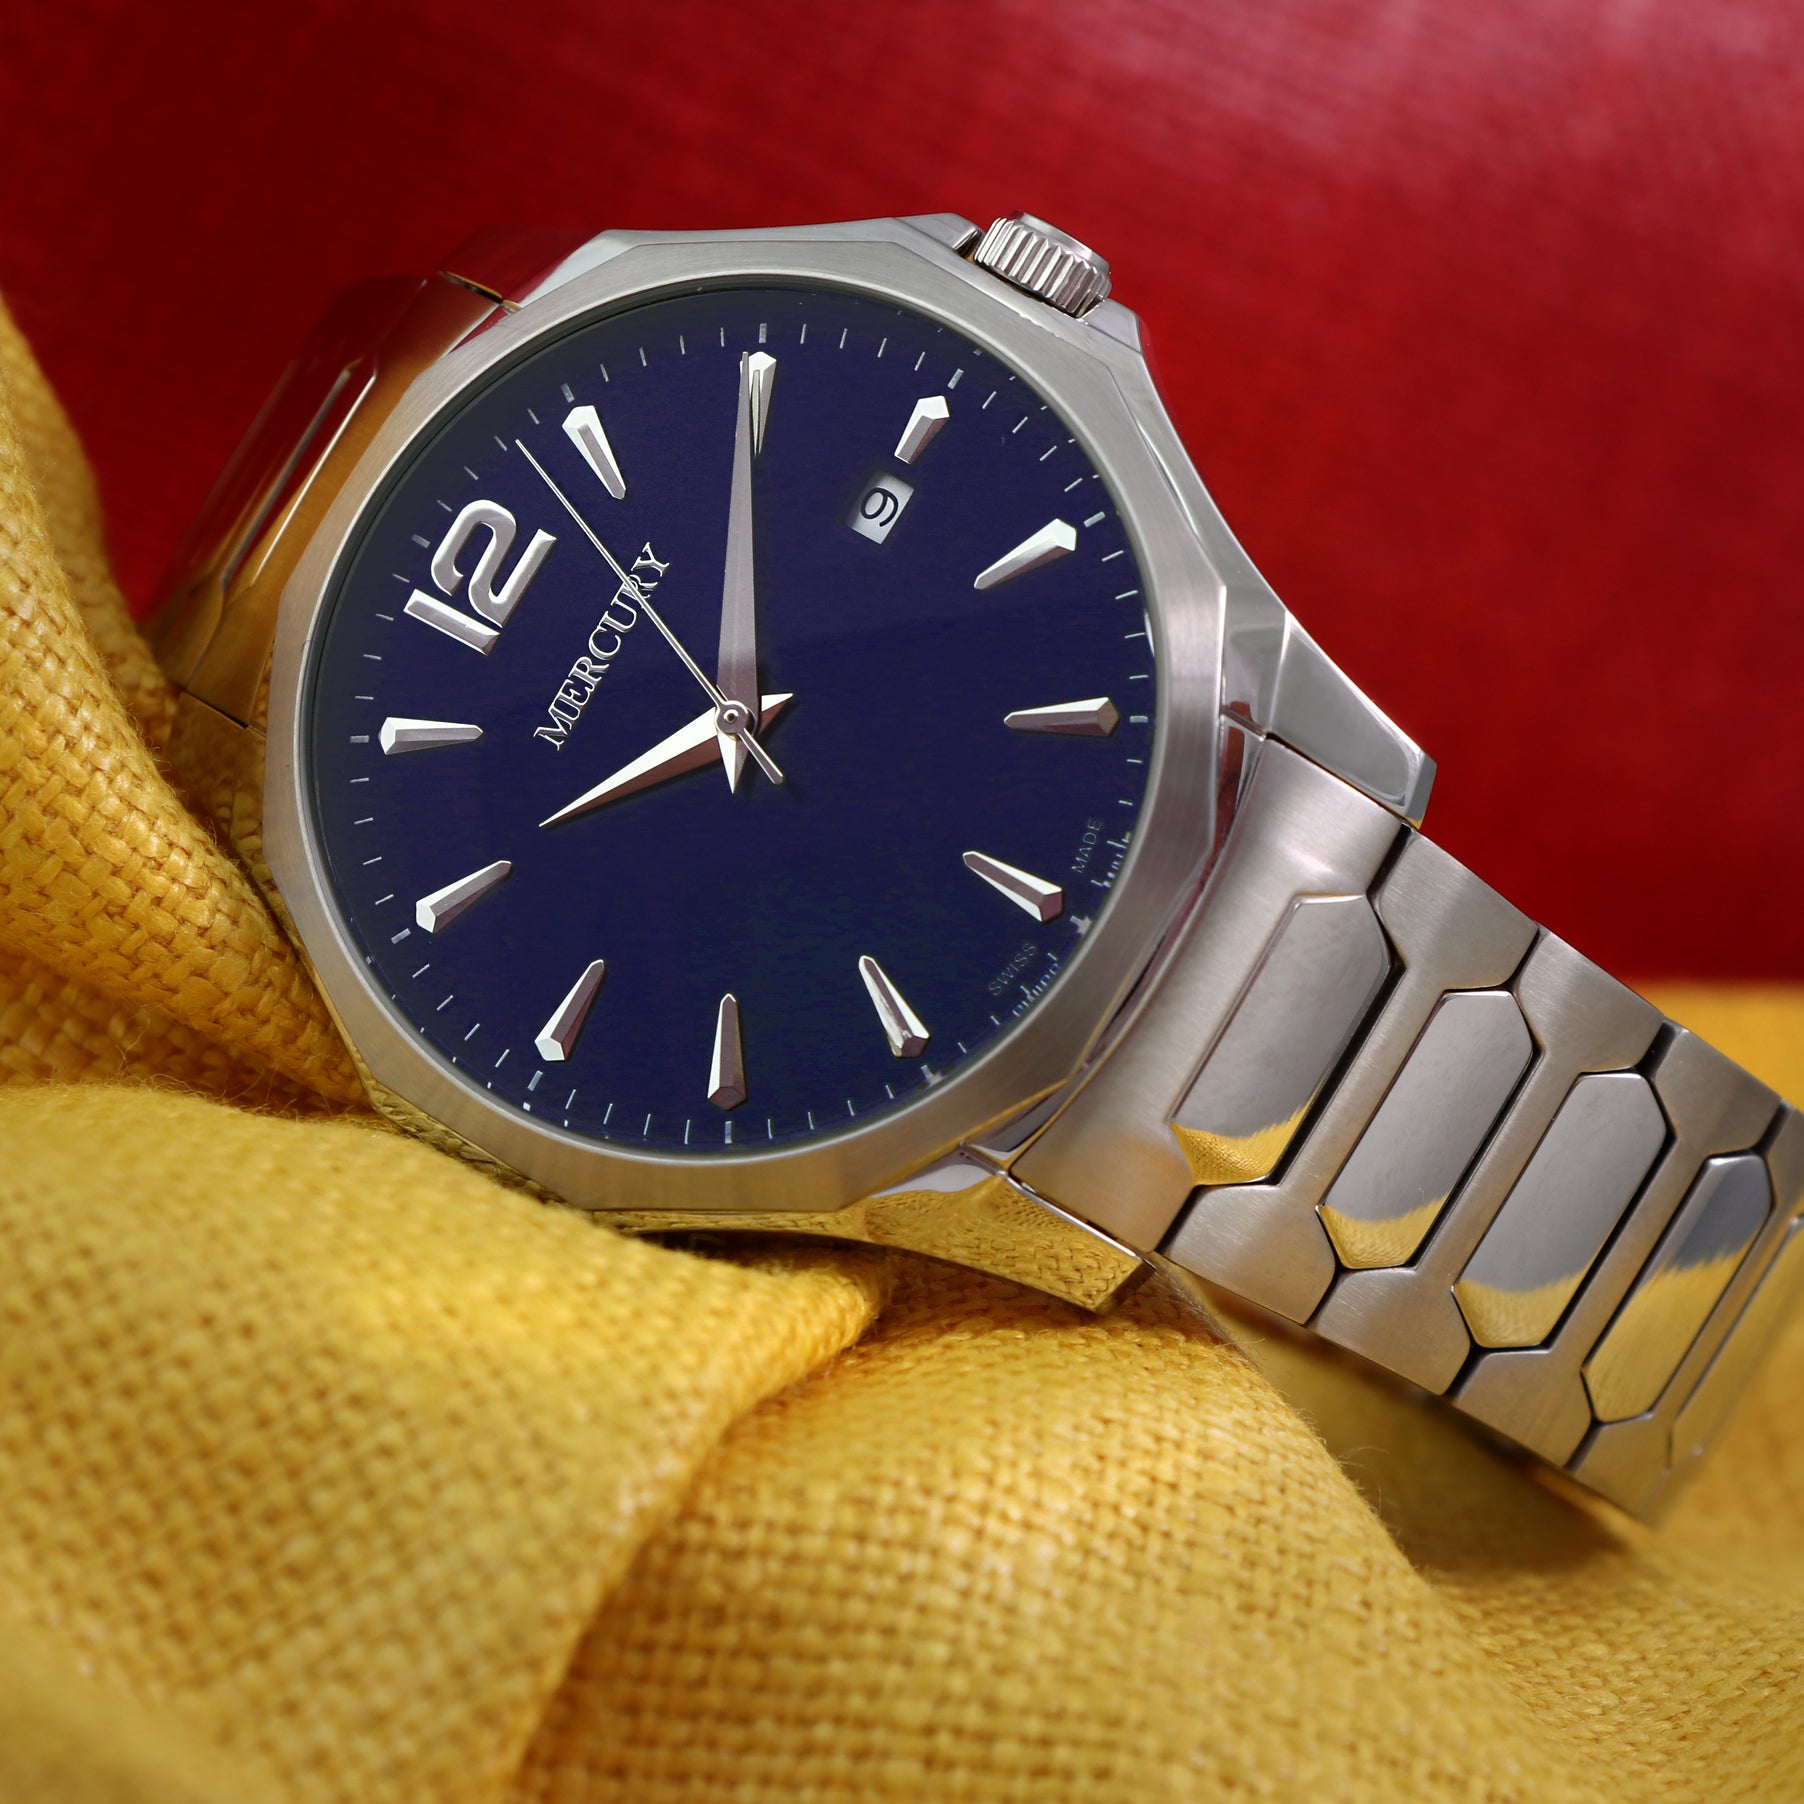 Mercury Men's Swiss Quartz Watch with Blue Dial - MER-0049